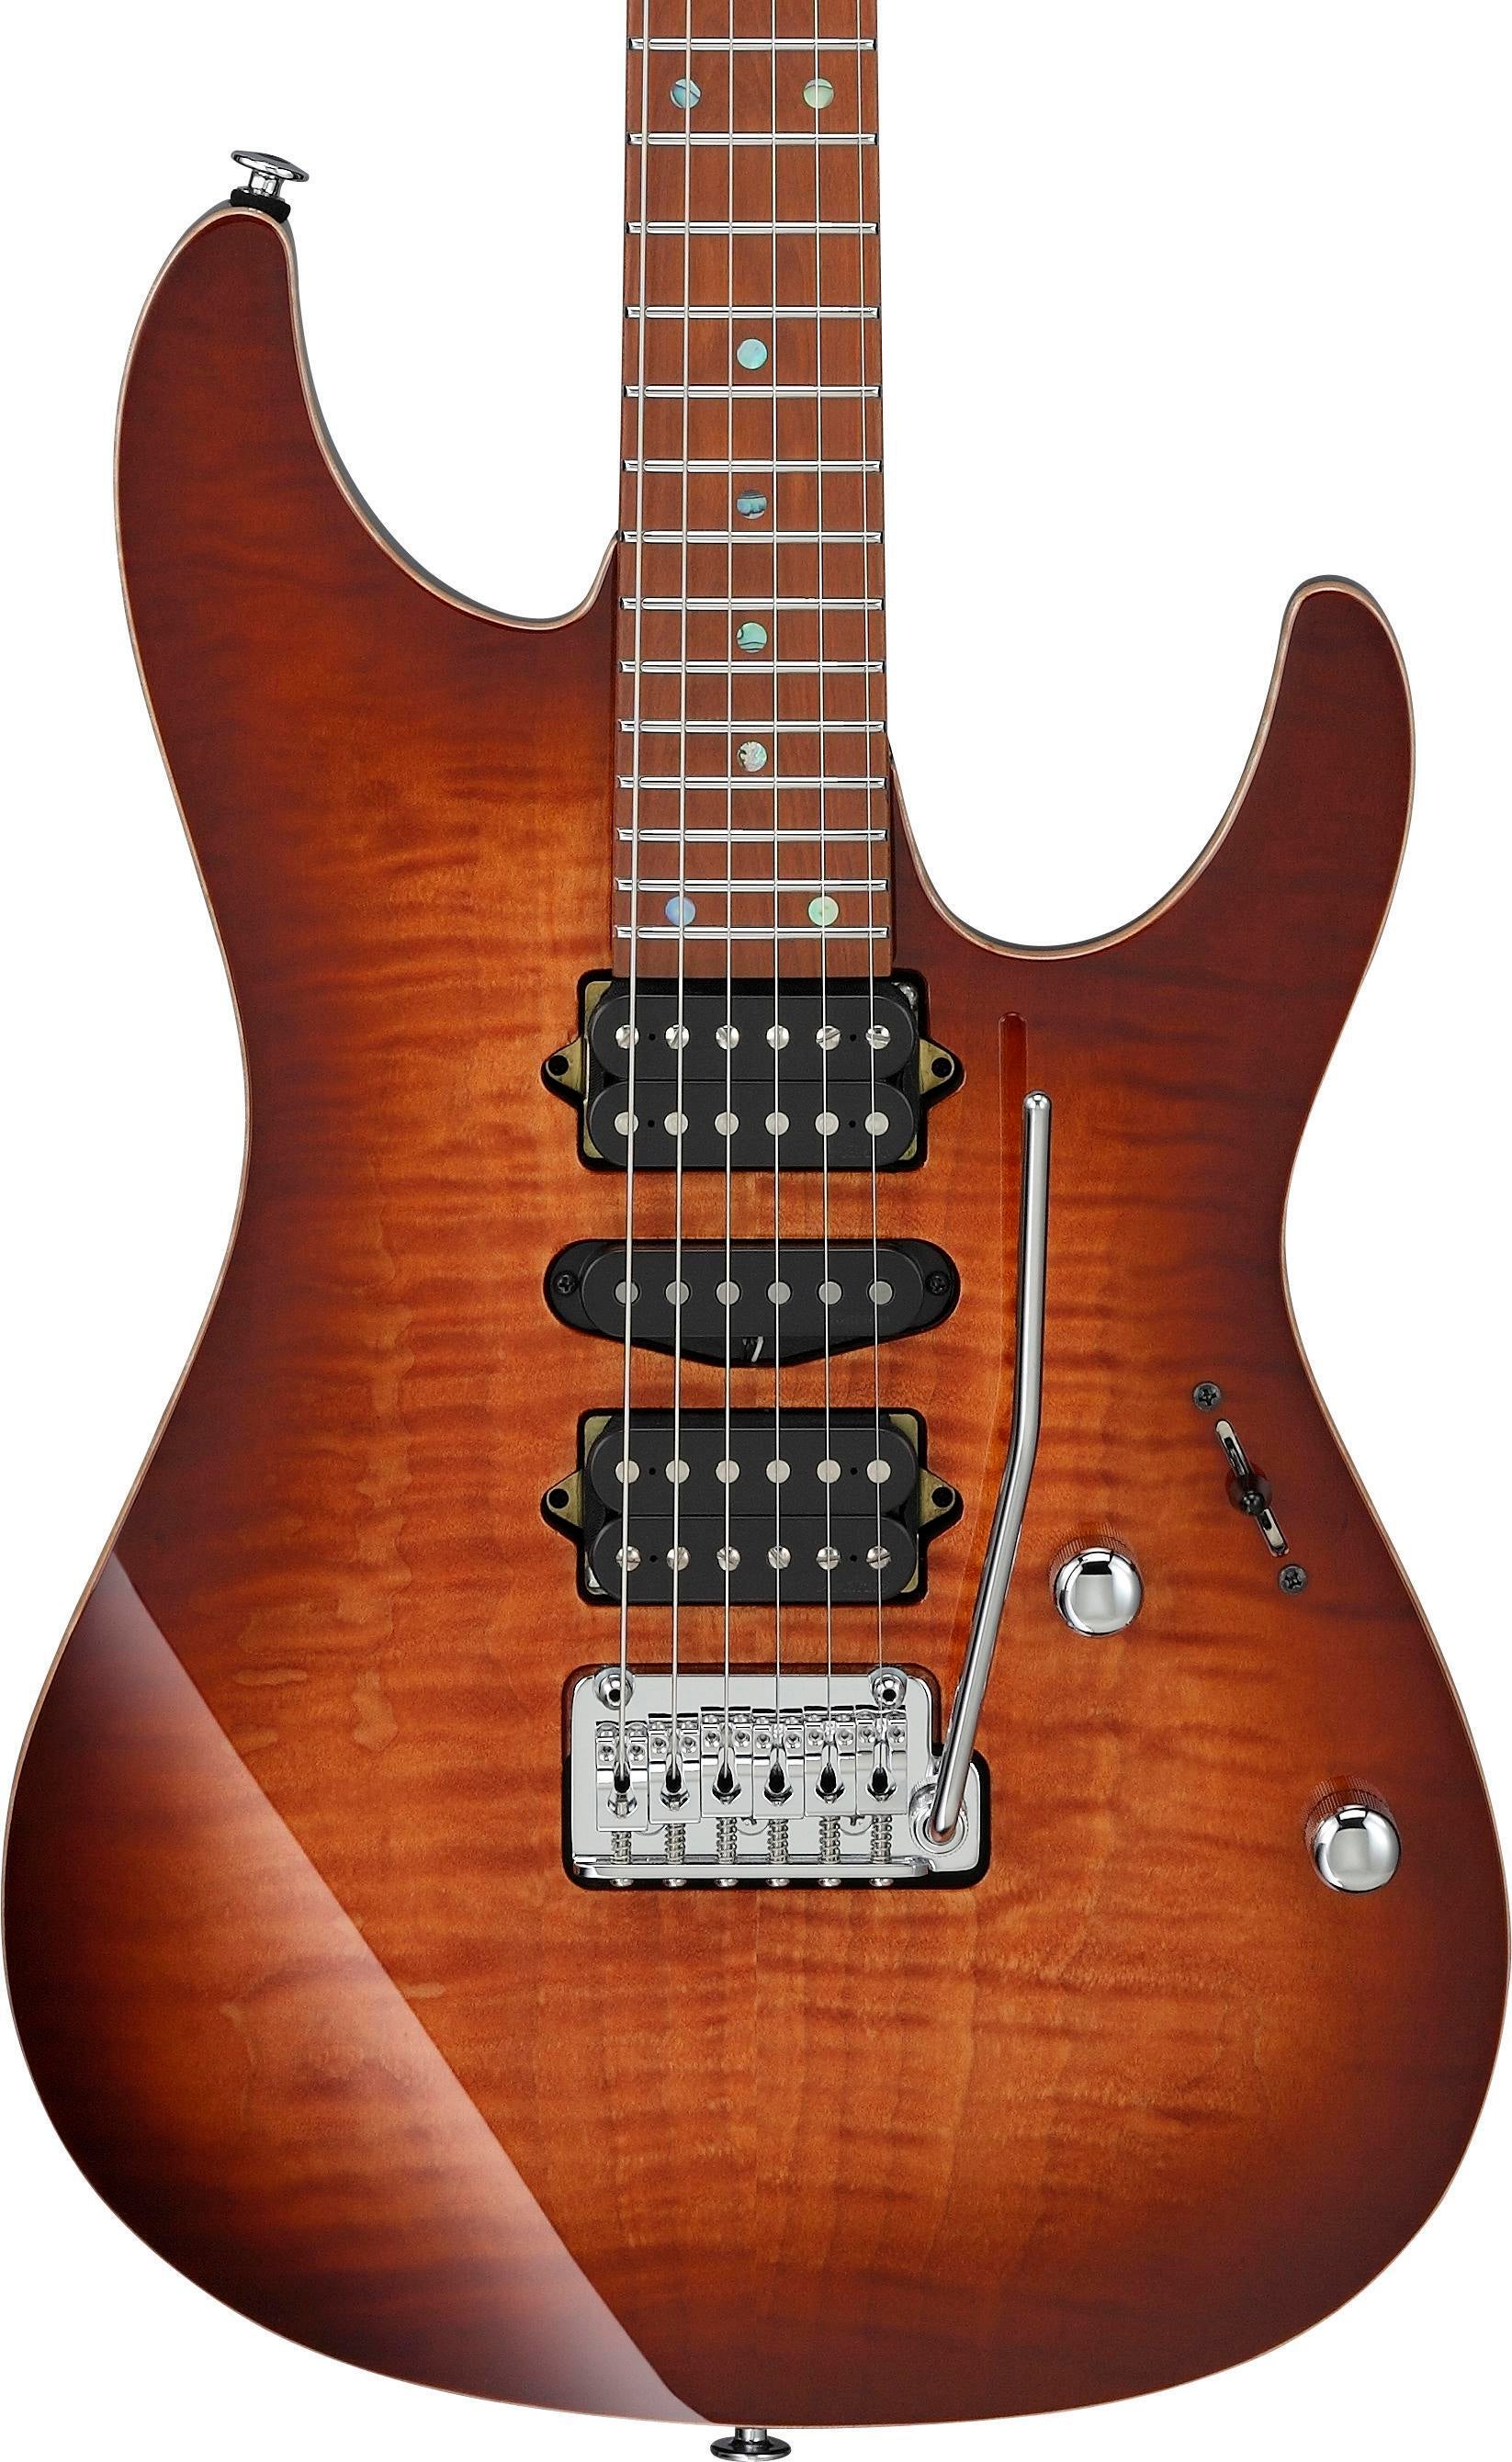 Ibanez Prestige AZ2407F Electric Guitar - Brownish Sphalerite